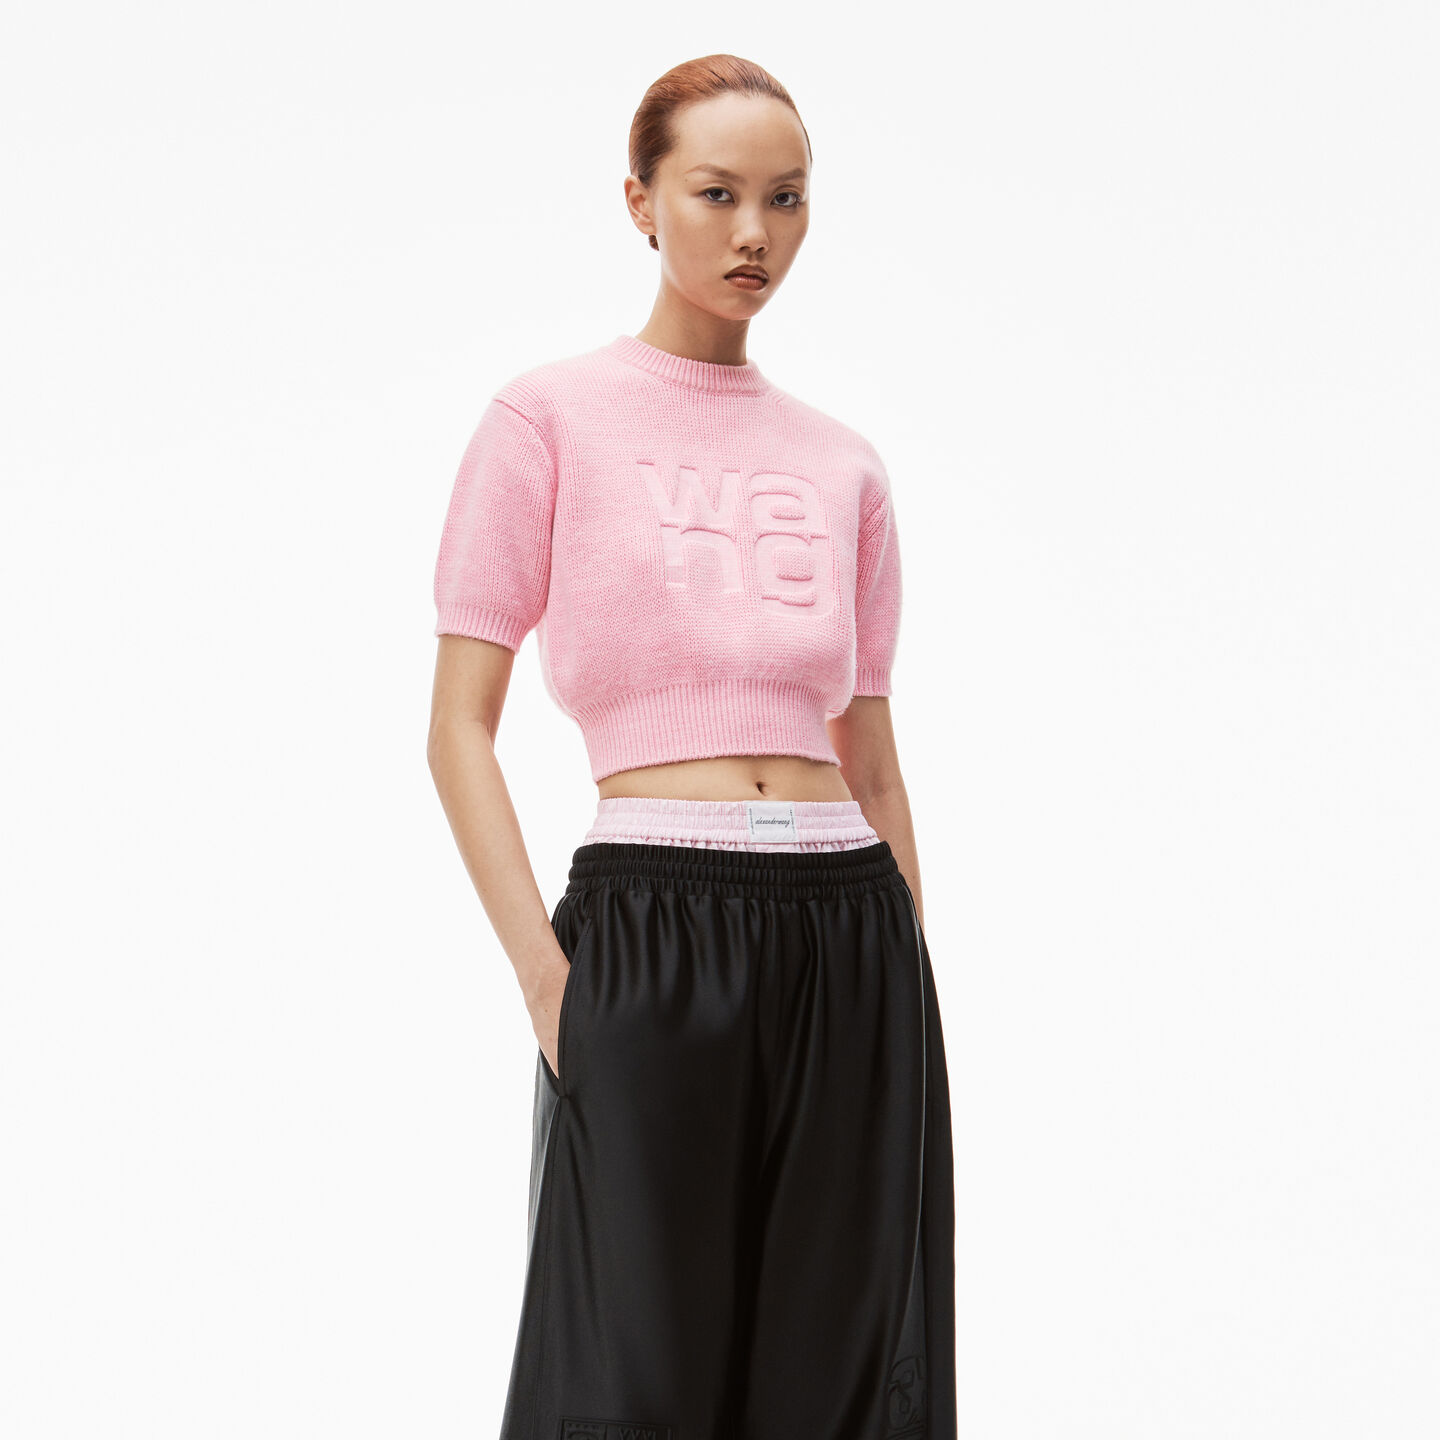 Alexander Wang Short Sleeve Pullover In Compact Deboss In Prism Pink